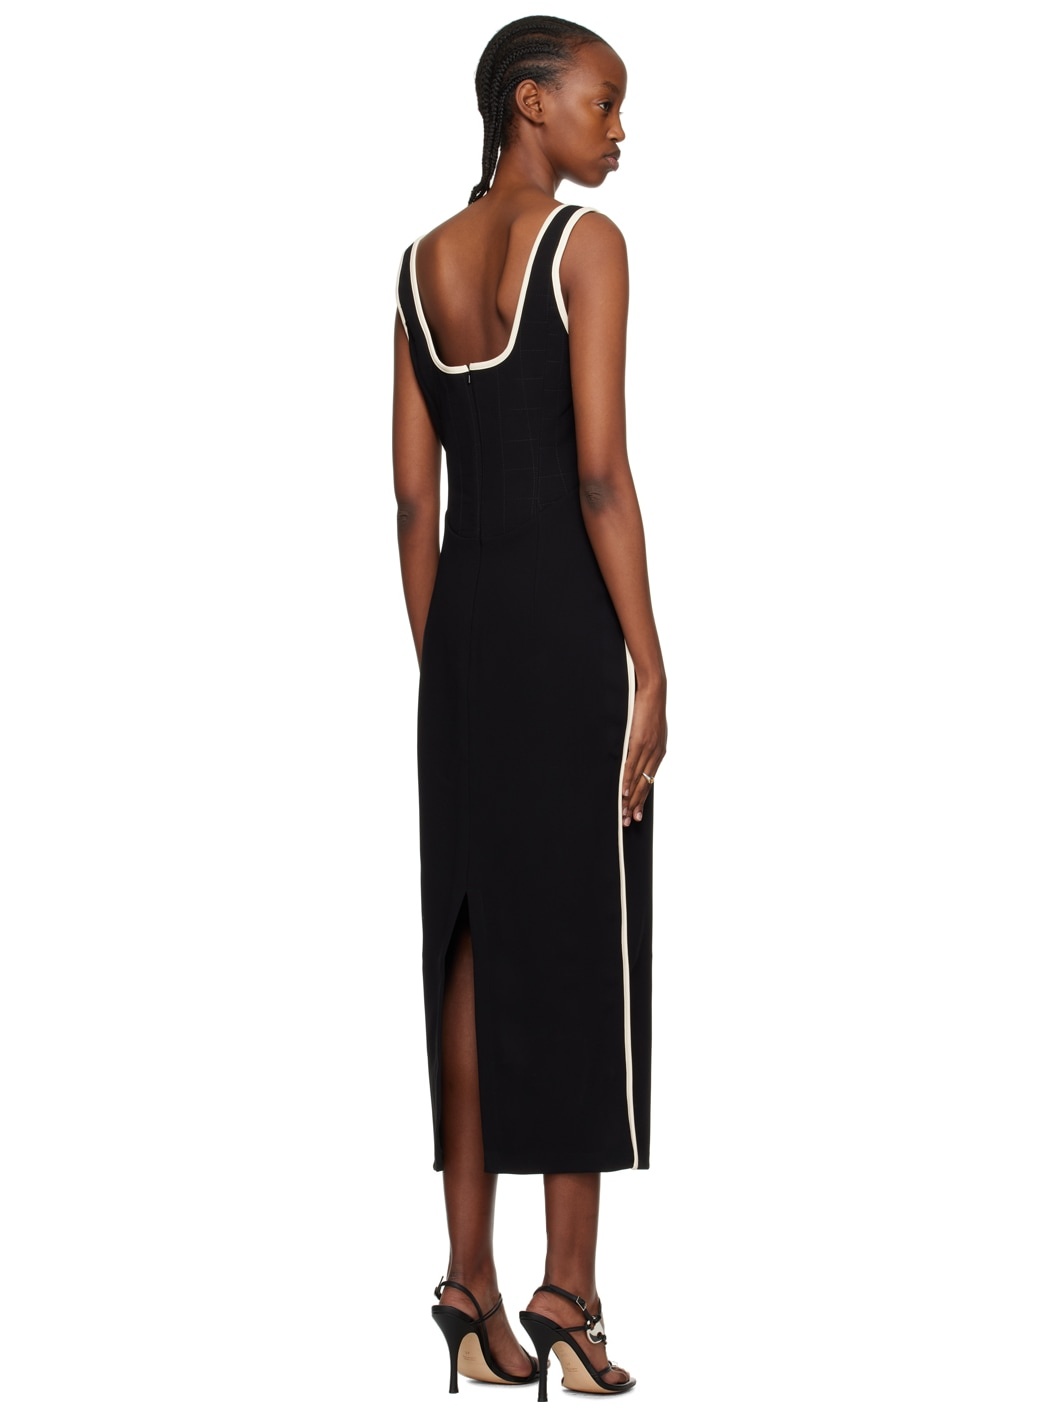 SSENSE Work Capsule – Black Lottie Maxi Dress - 3